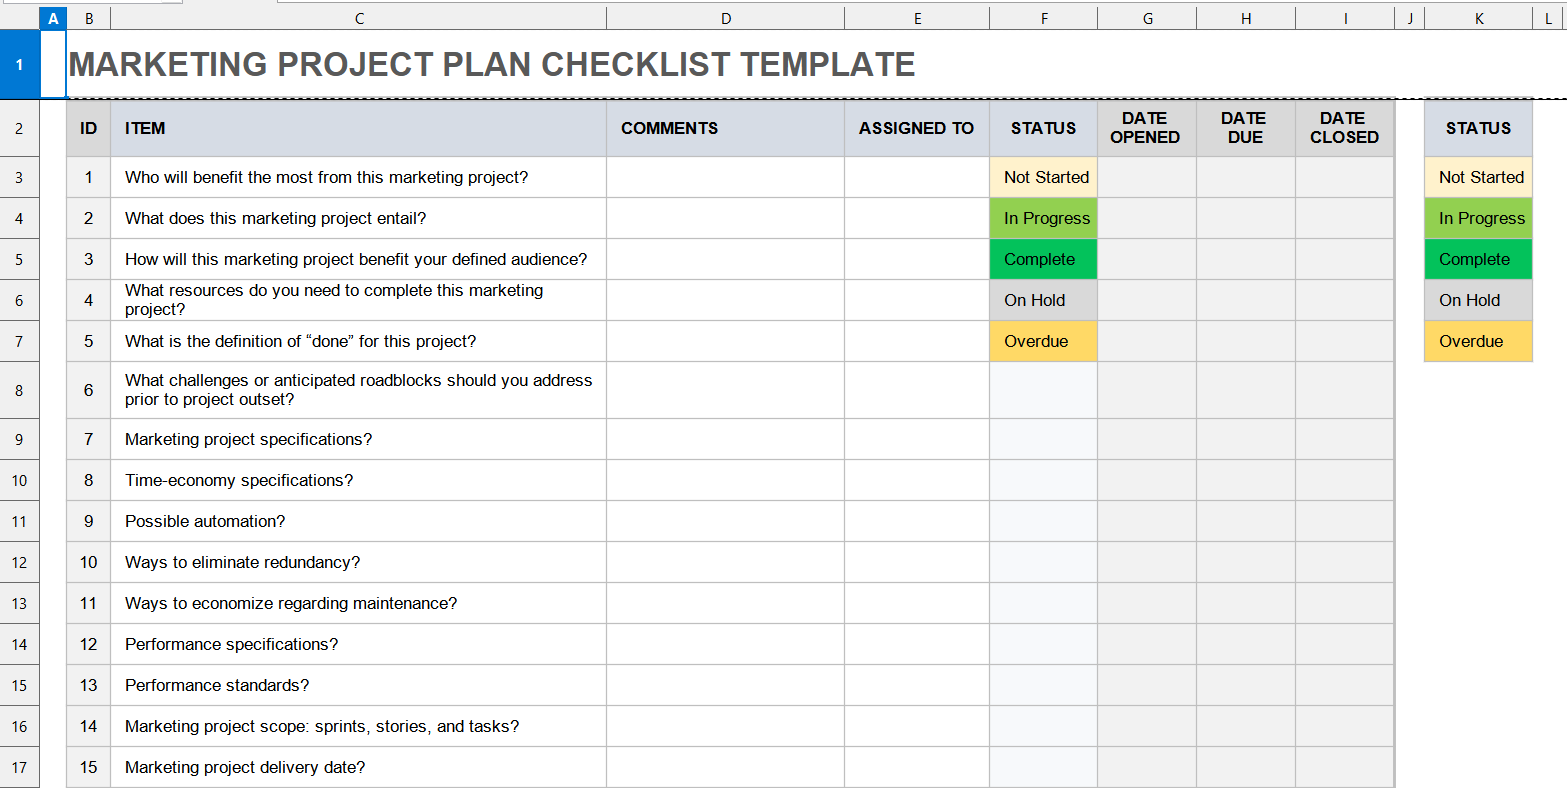 Smartsheet Marketing Project Plan Checklist Template screenshot